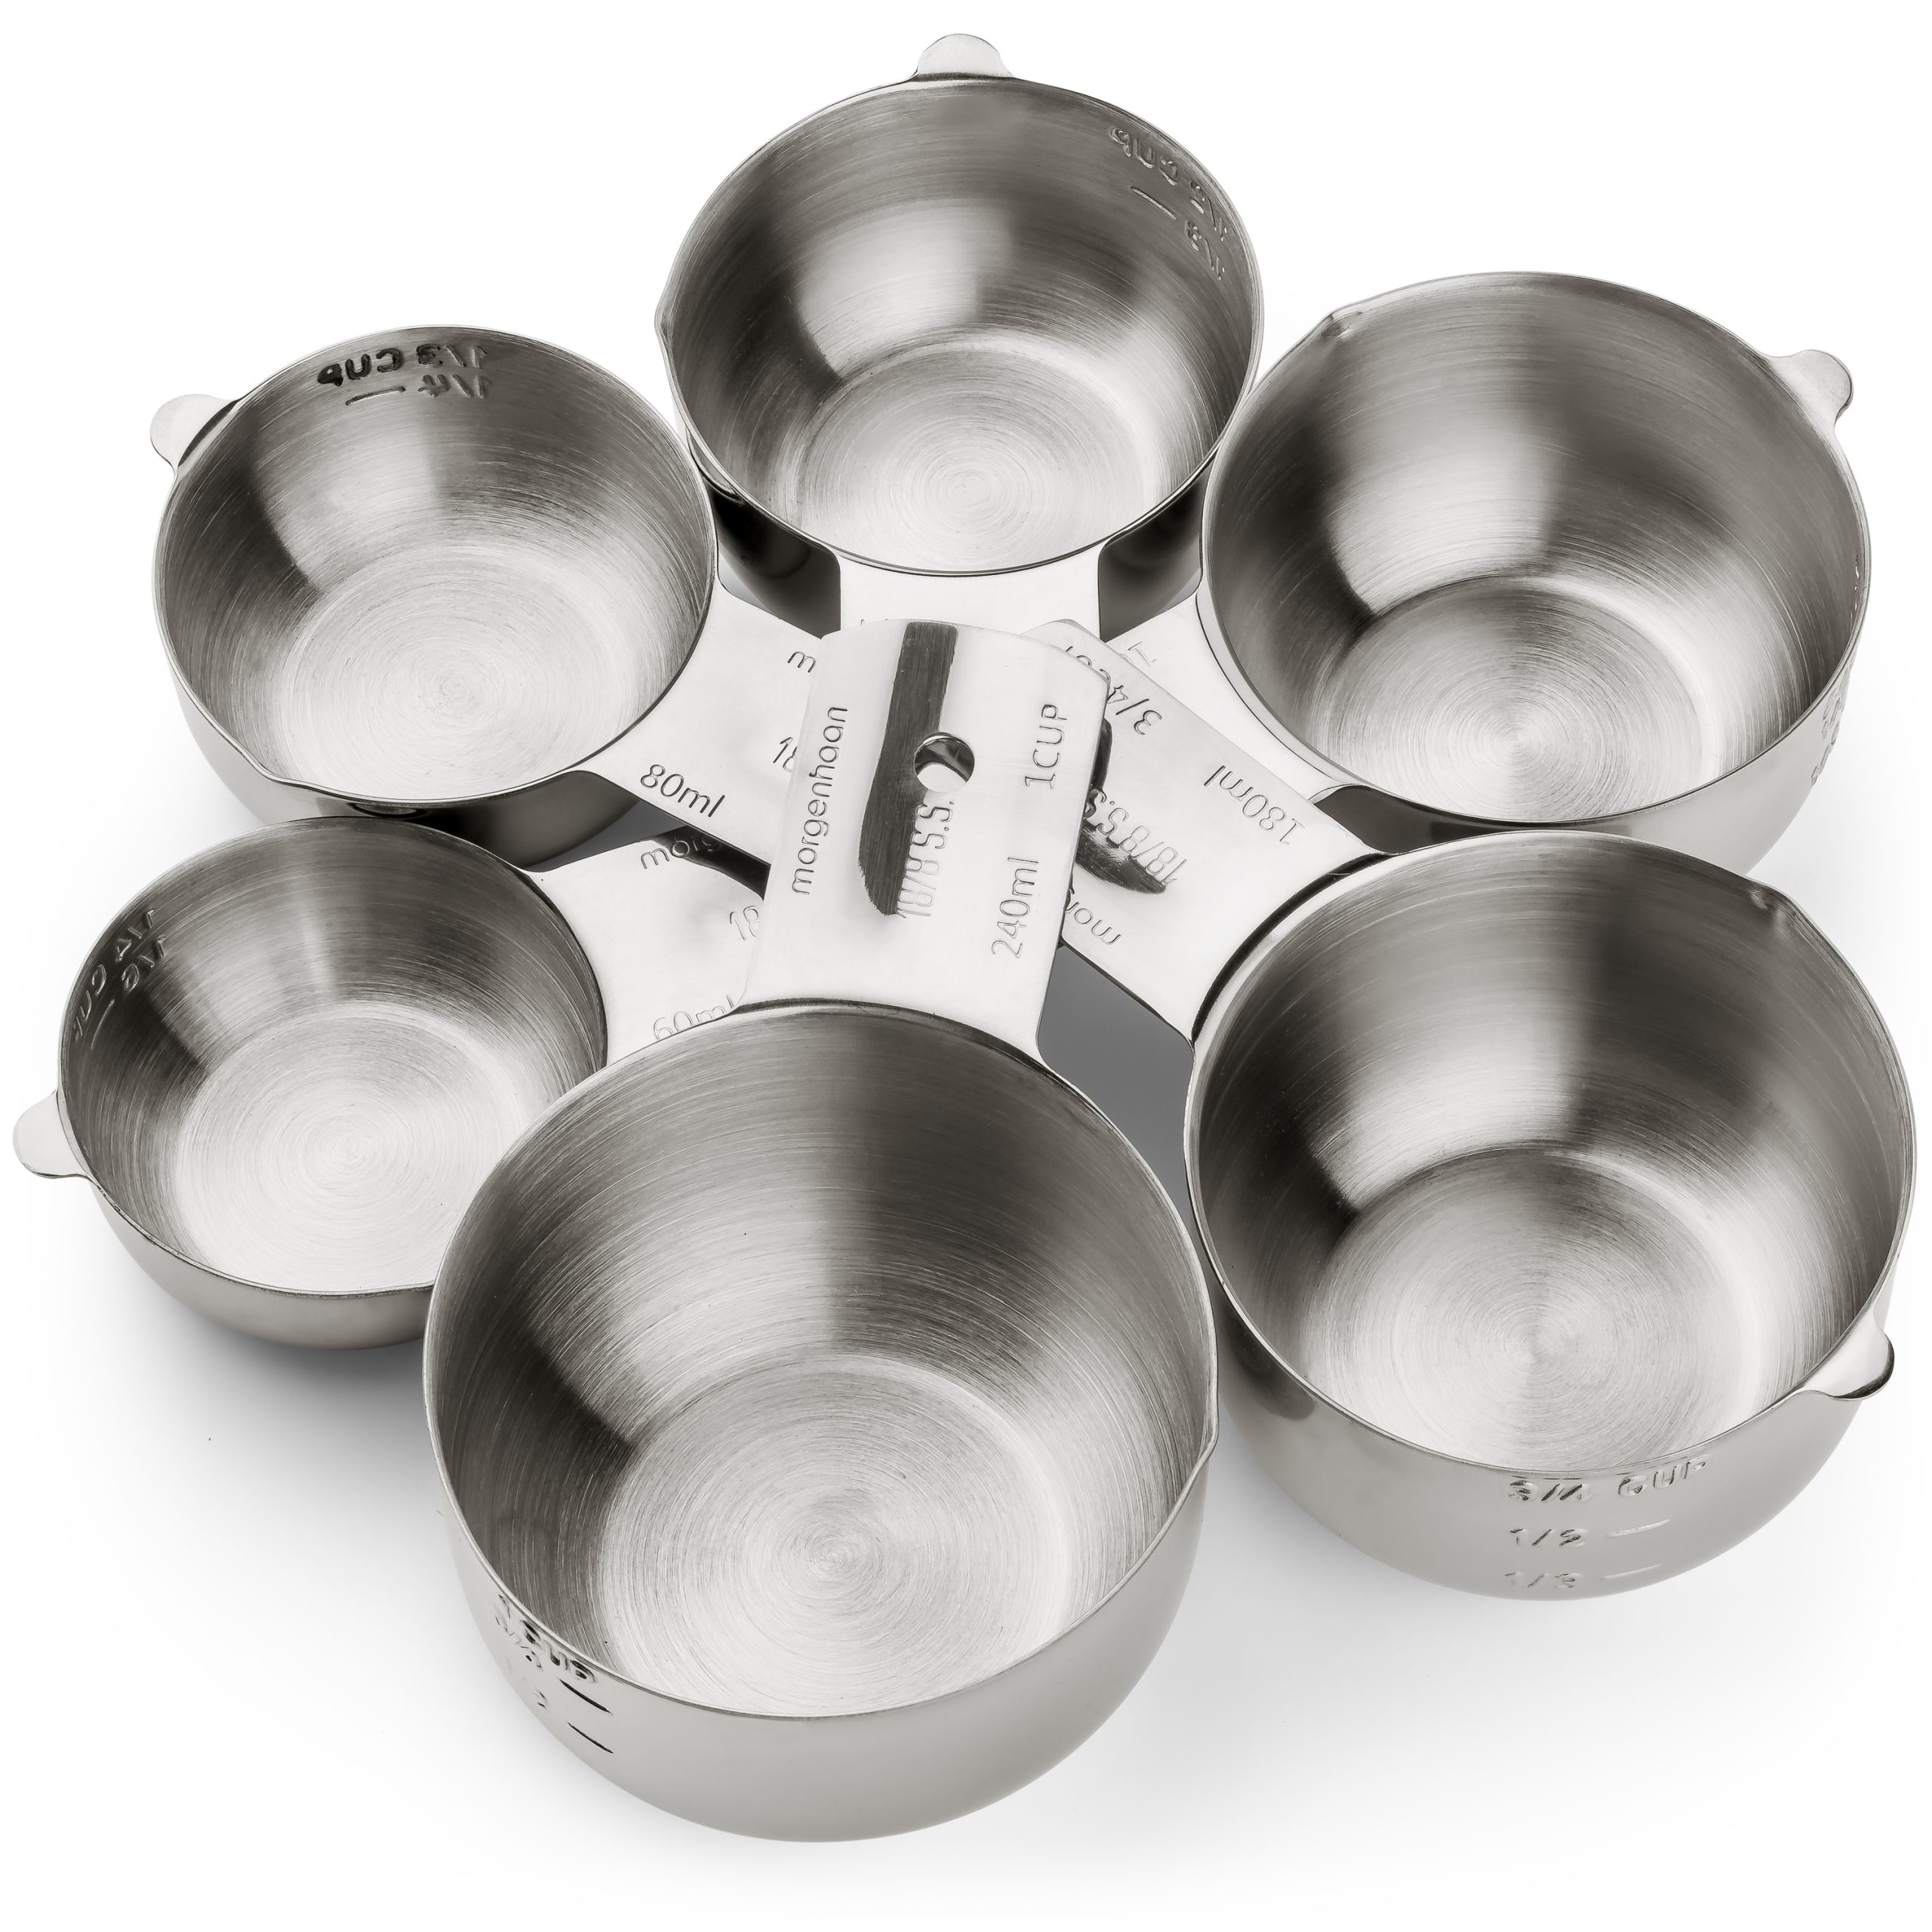 Morgenhaan (13-Piece) Stainless Steel Measuring Cups & Spoons